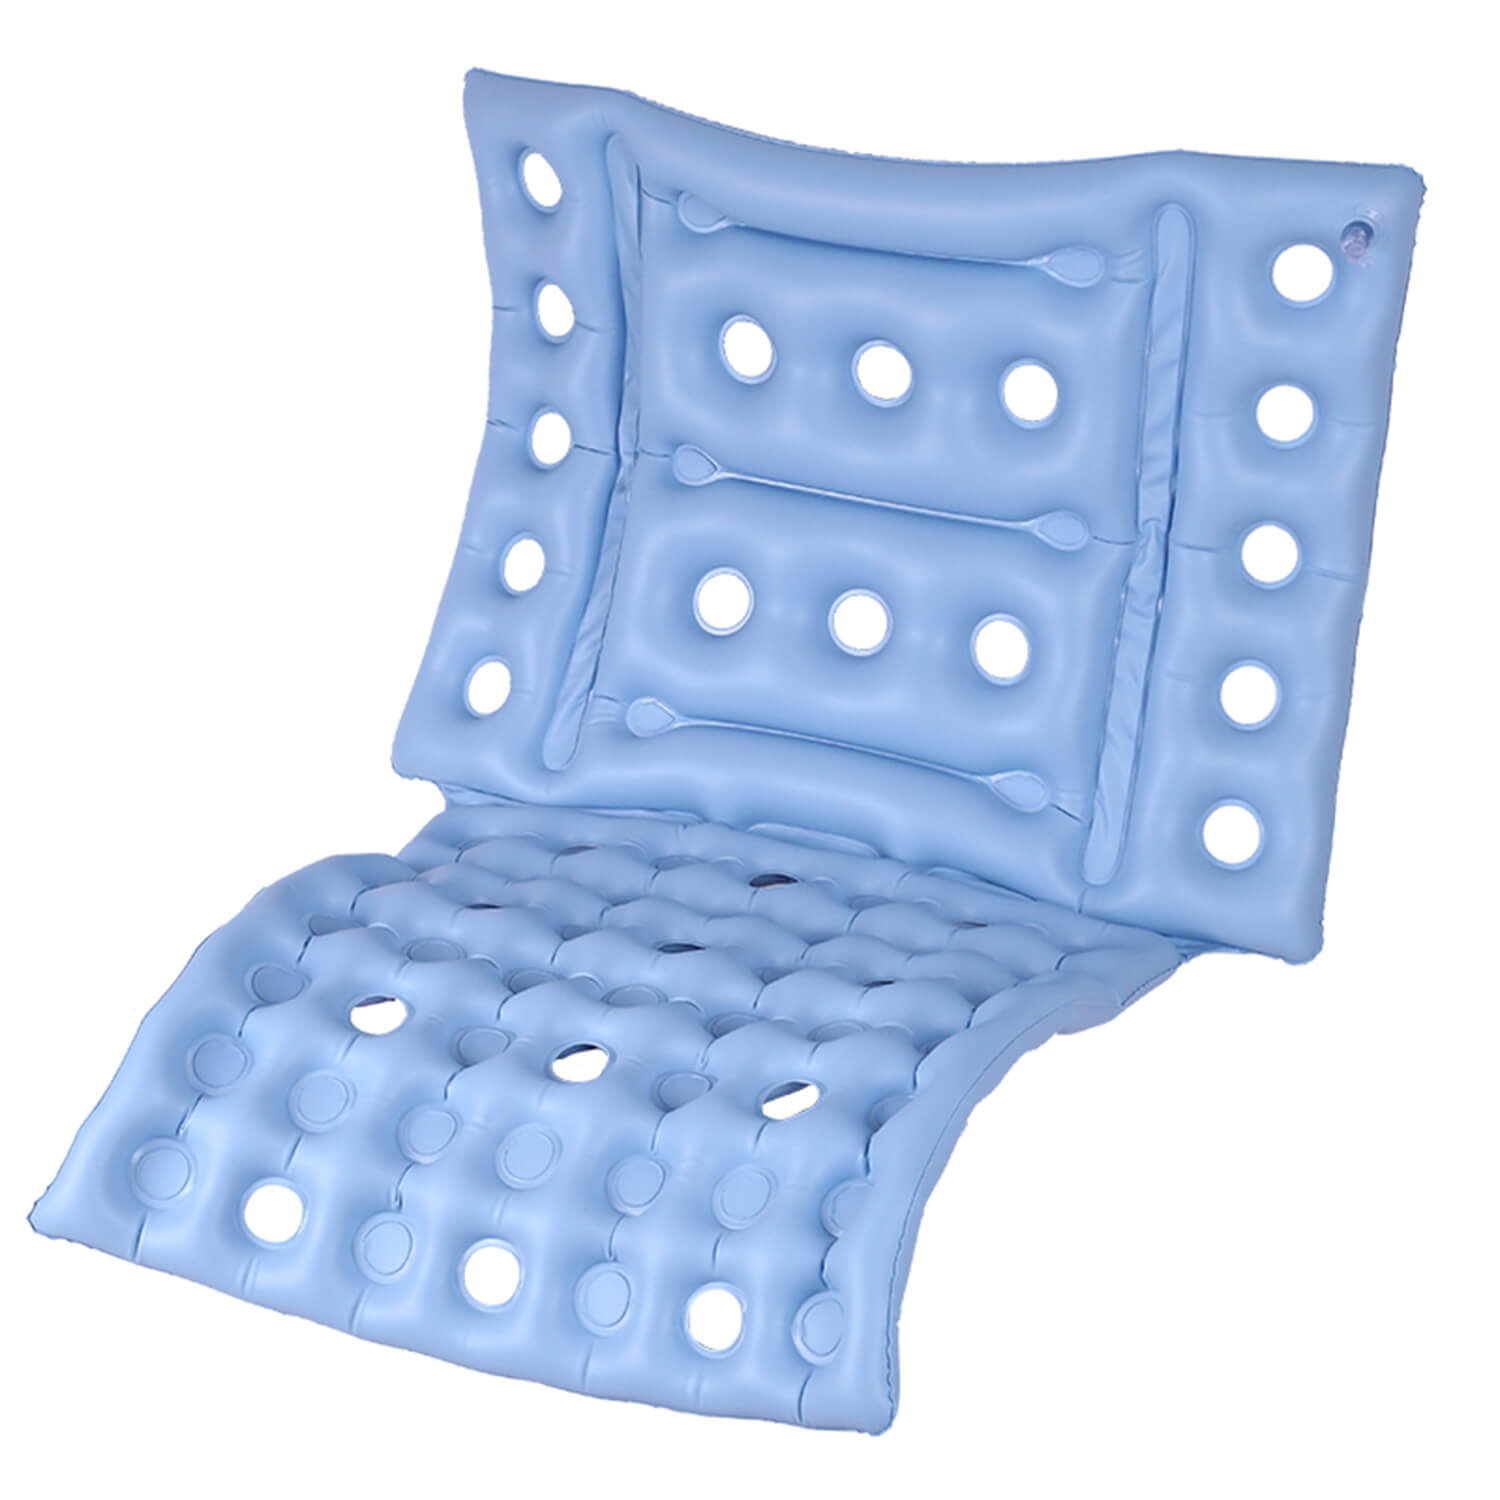 Inflatable Seat Cushion Anti-Decubitus Wheelchair Cushion, Breathable  Backrest Air Cushion Bed Sore Cushion for Pressure Sores Pain Relief -  Portable